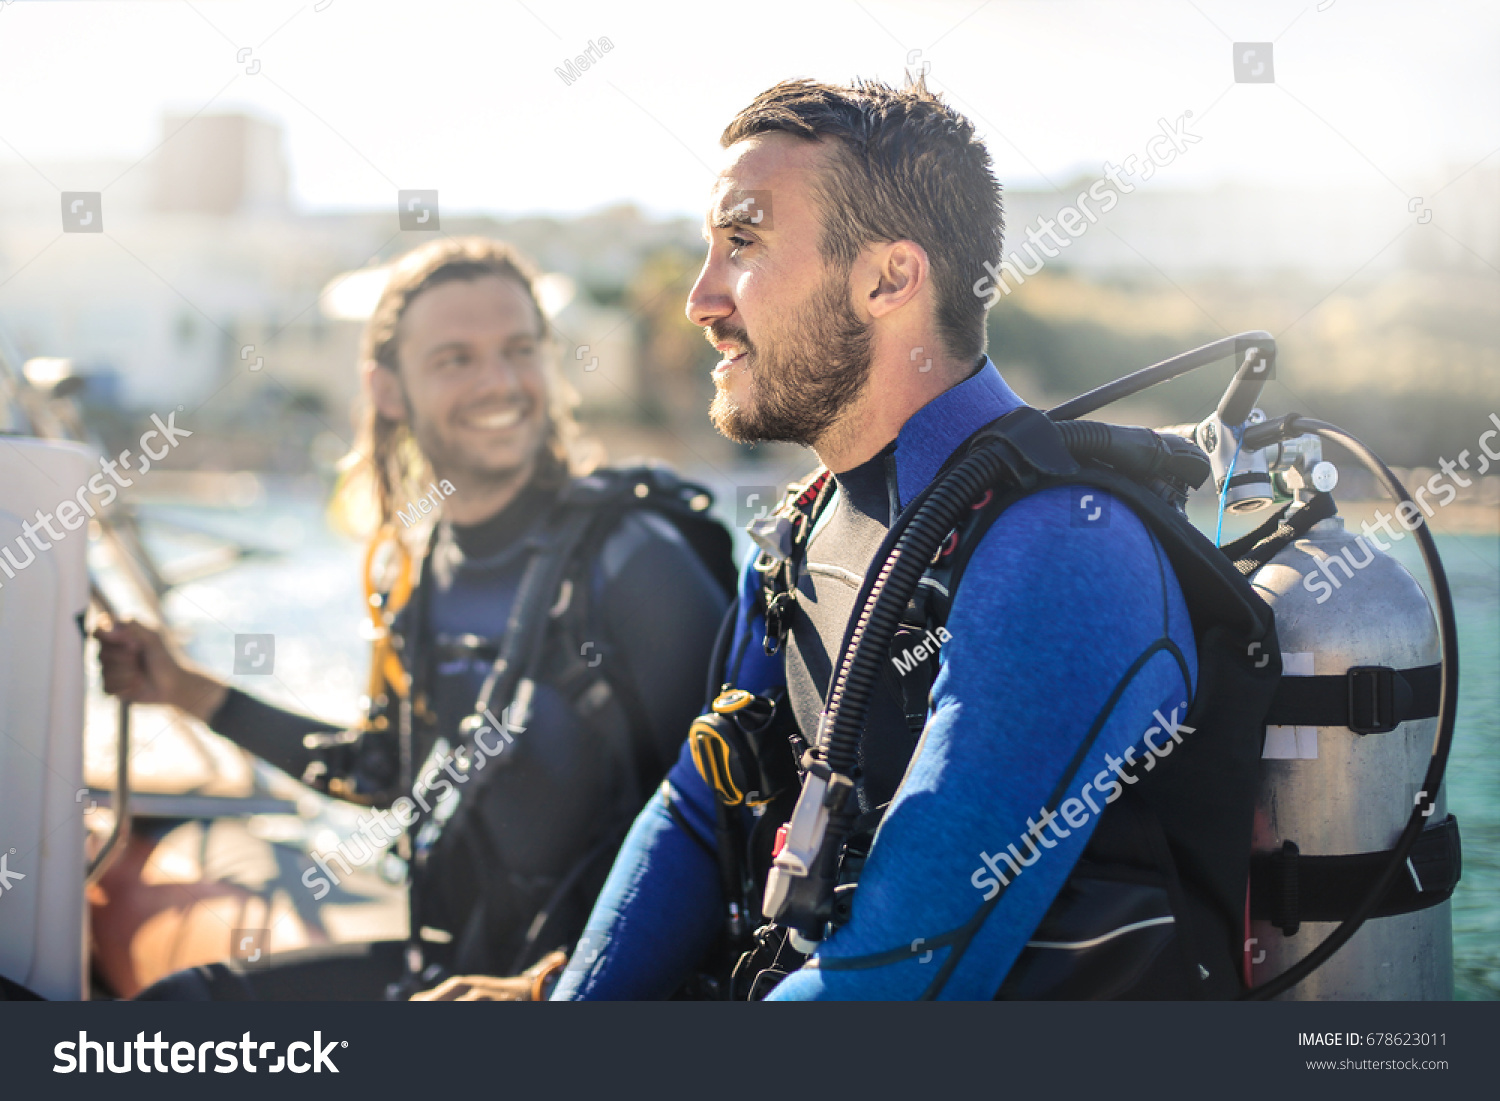 https://wuwit.com/wp-content/uploads/2019/04/stock-photo-scuba-divers-having-fun-678623011.jpg